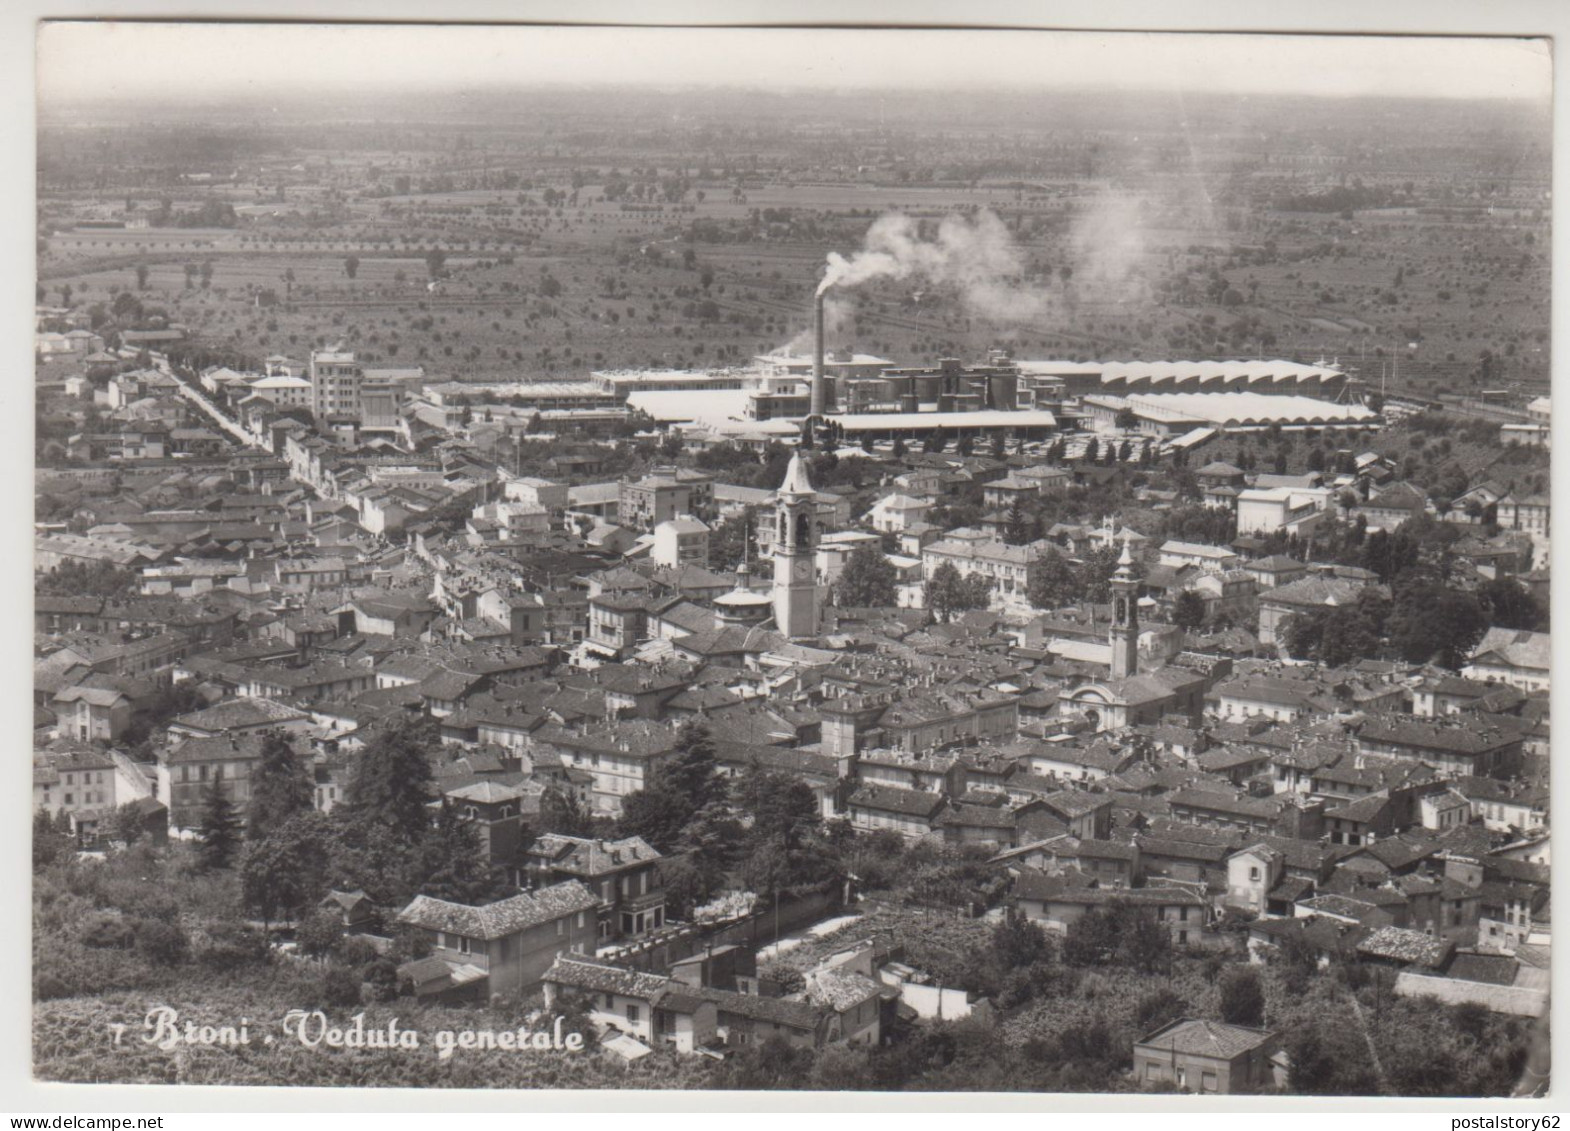 Broni (Pv) Veduta Panoramica. Cartolina Fotografica Viaggiata 1961 - Pavia